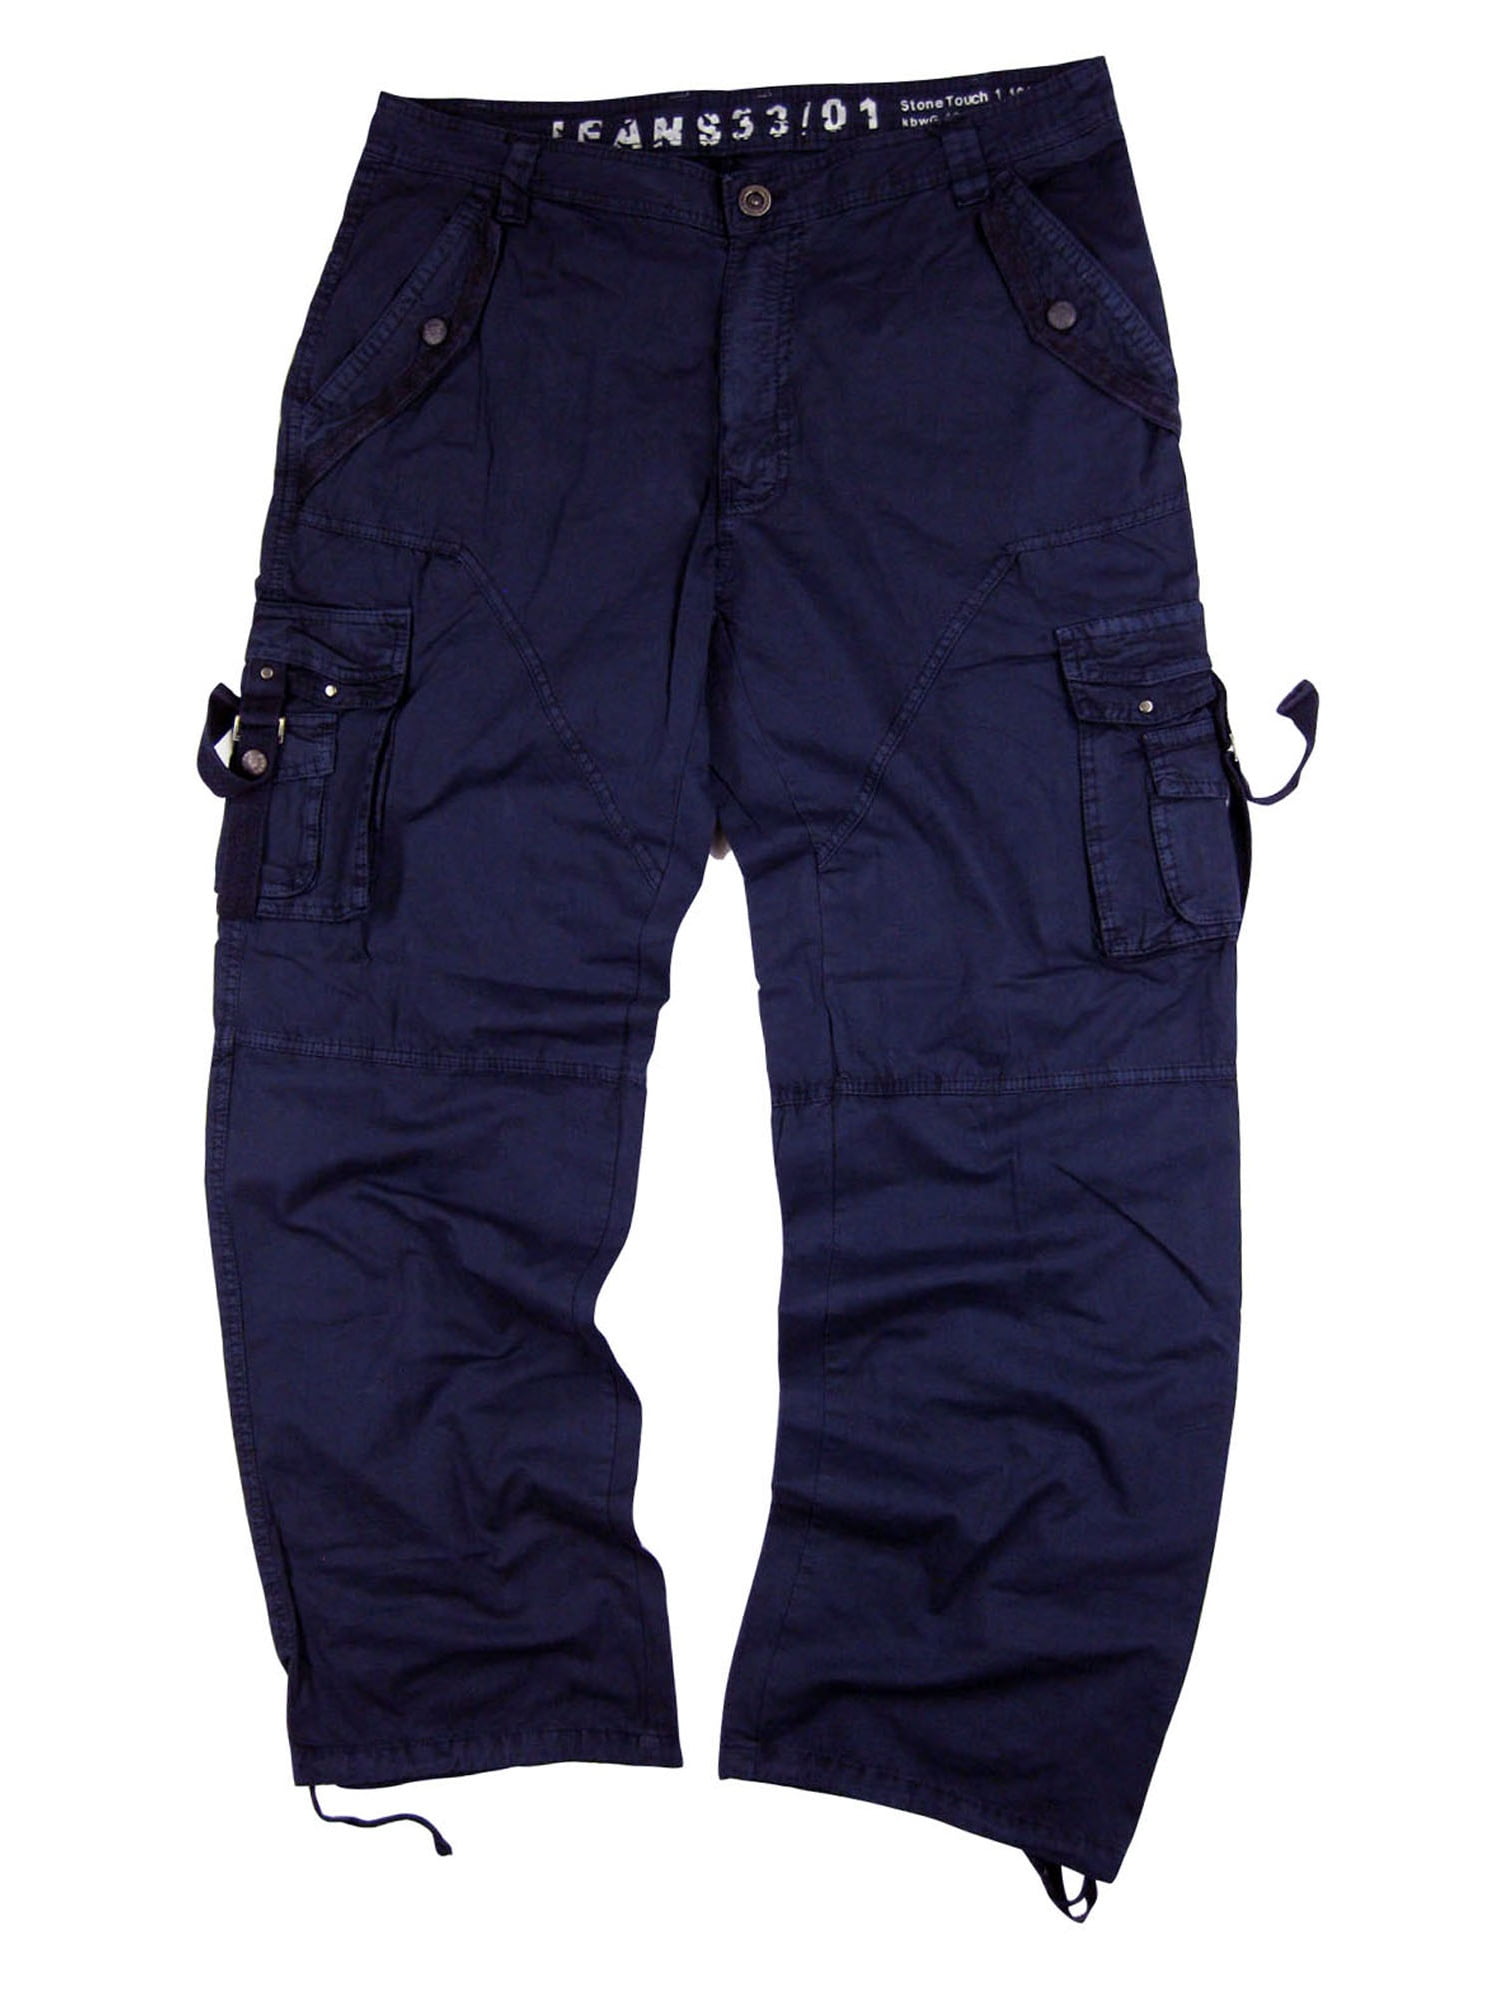 StoneTouch #A8- Men's Military-Style Cargo Pants 32x34--Navy - Walmart ...